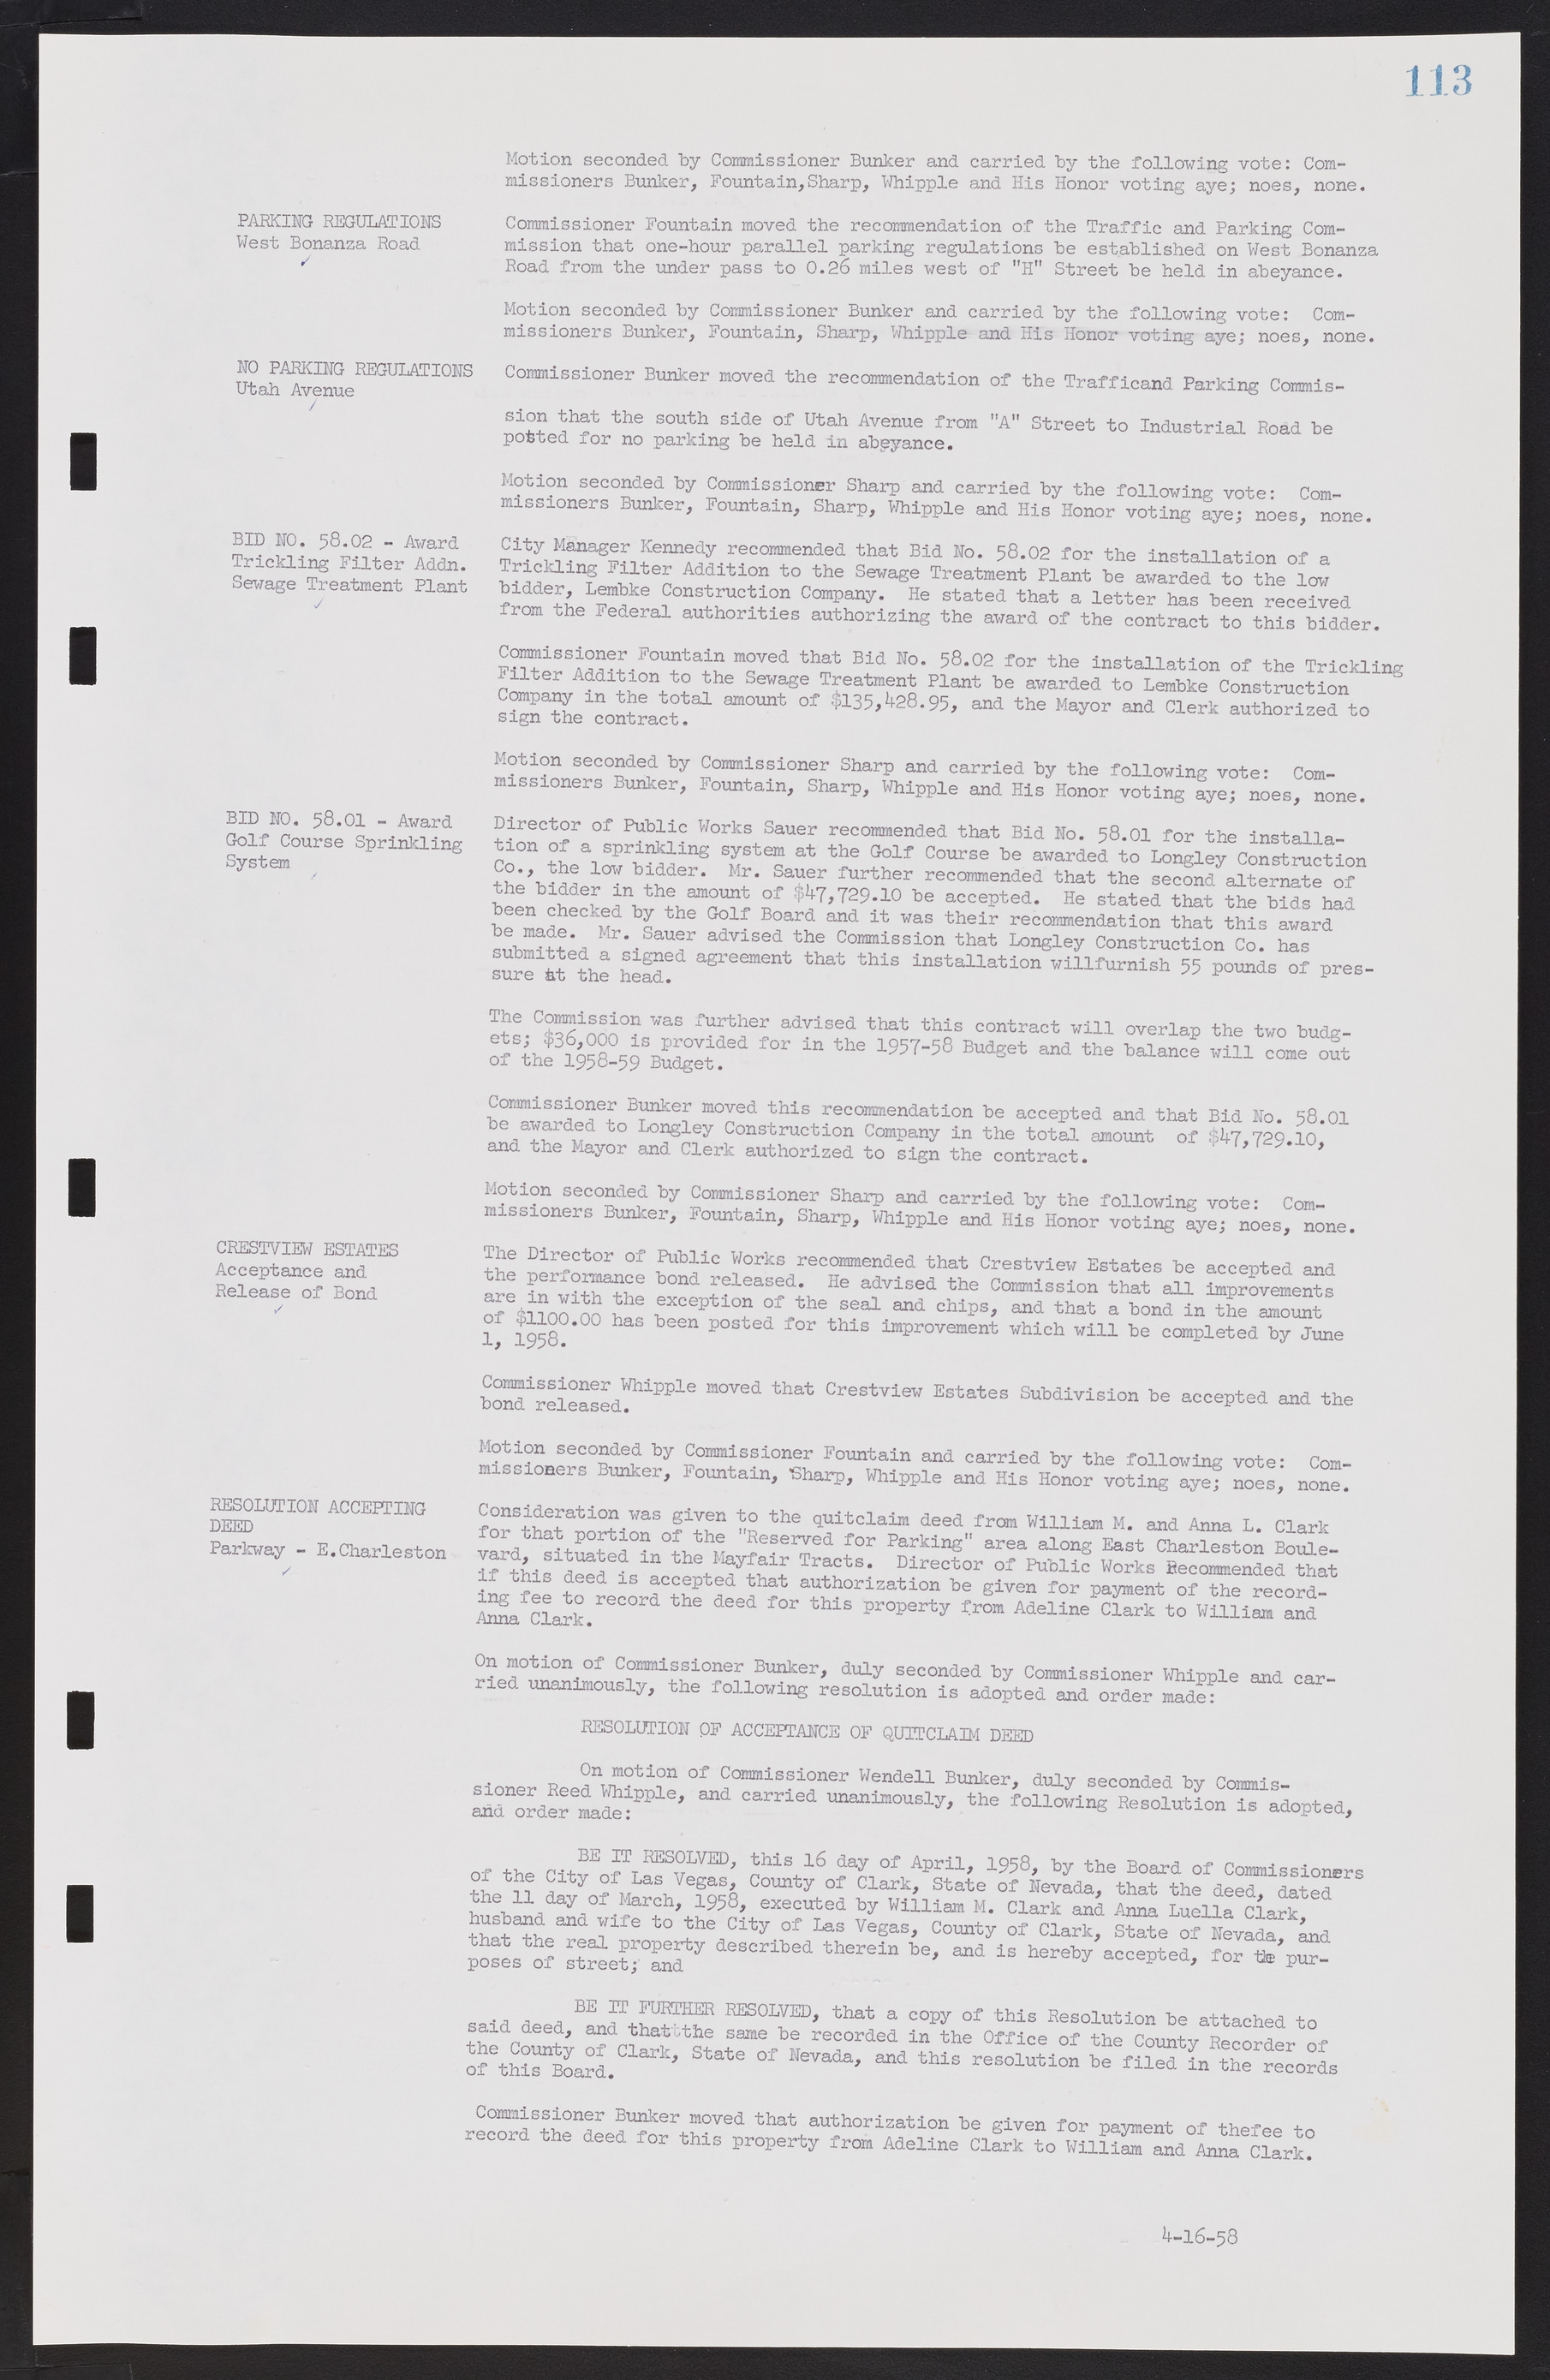 Las Vegas City Commission Minutes, November 20, 1957 to December 2, 1959, lvc000011-117